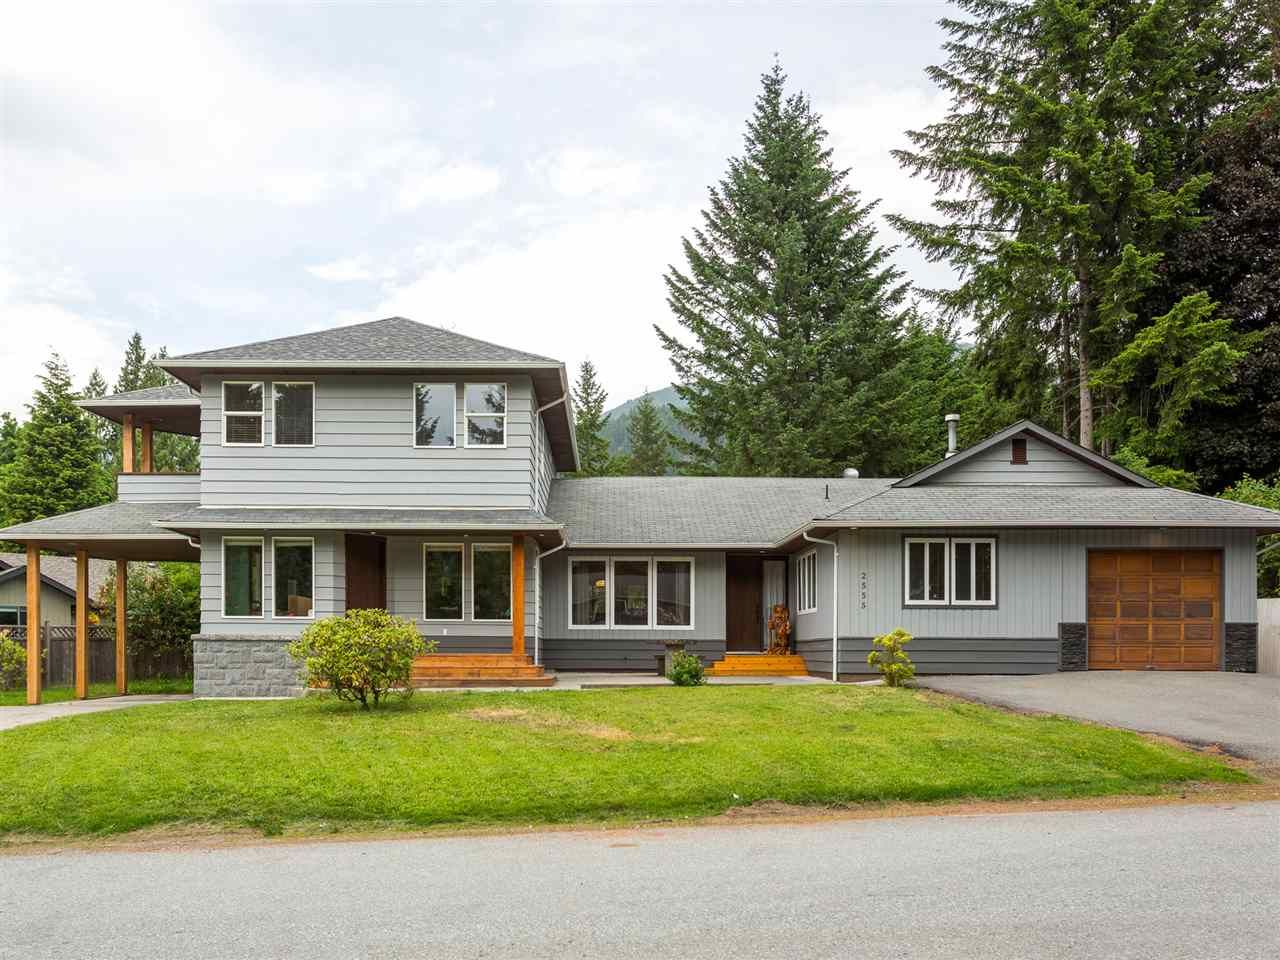 Main Photo: 2555 JURA Crescent in Squamish: Garibaldi Highlands House for sale : MLS®# R2176752